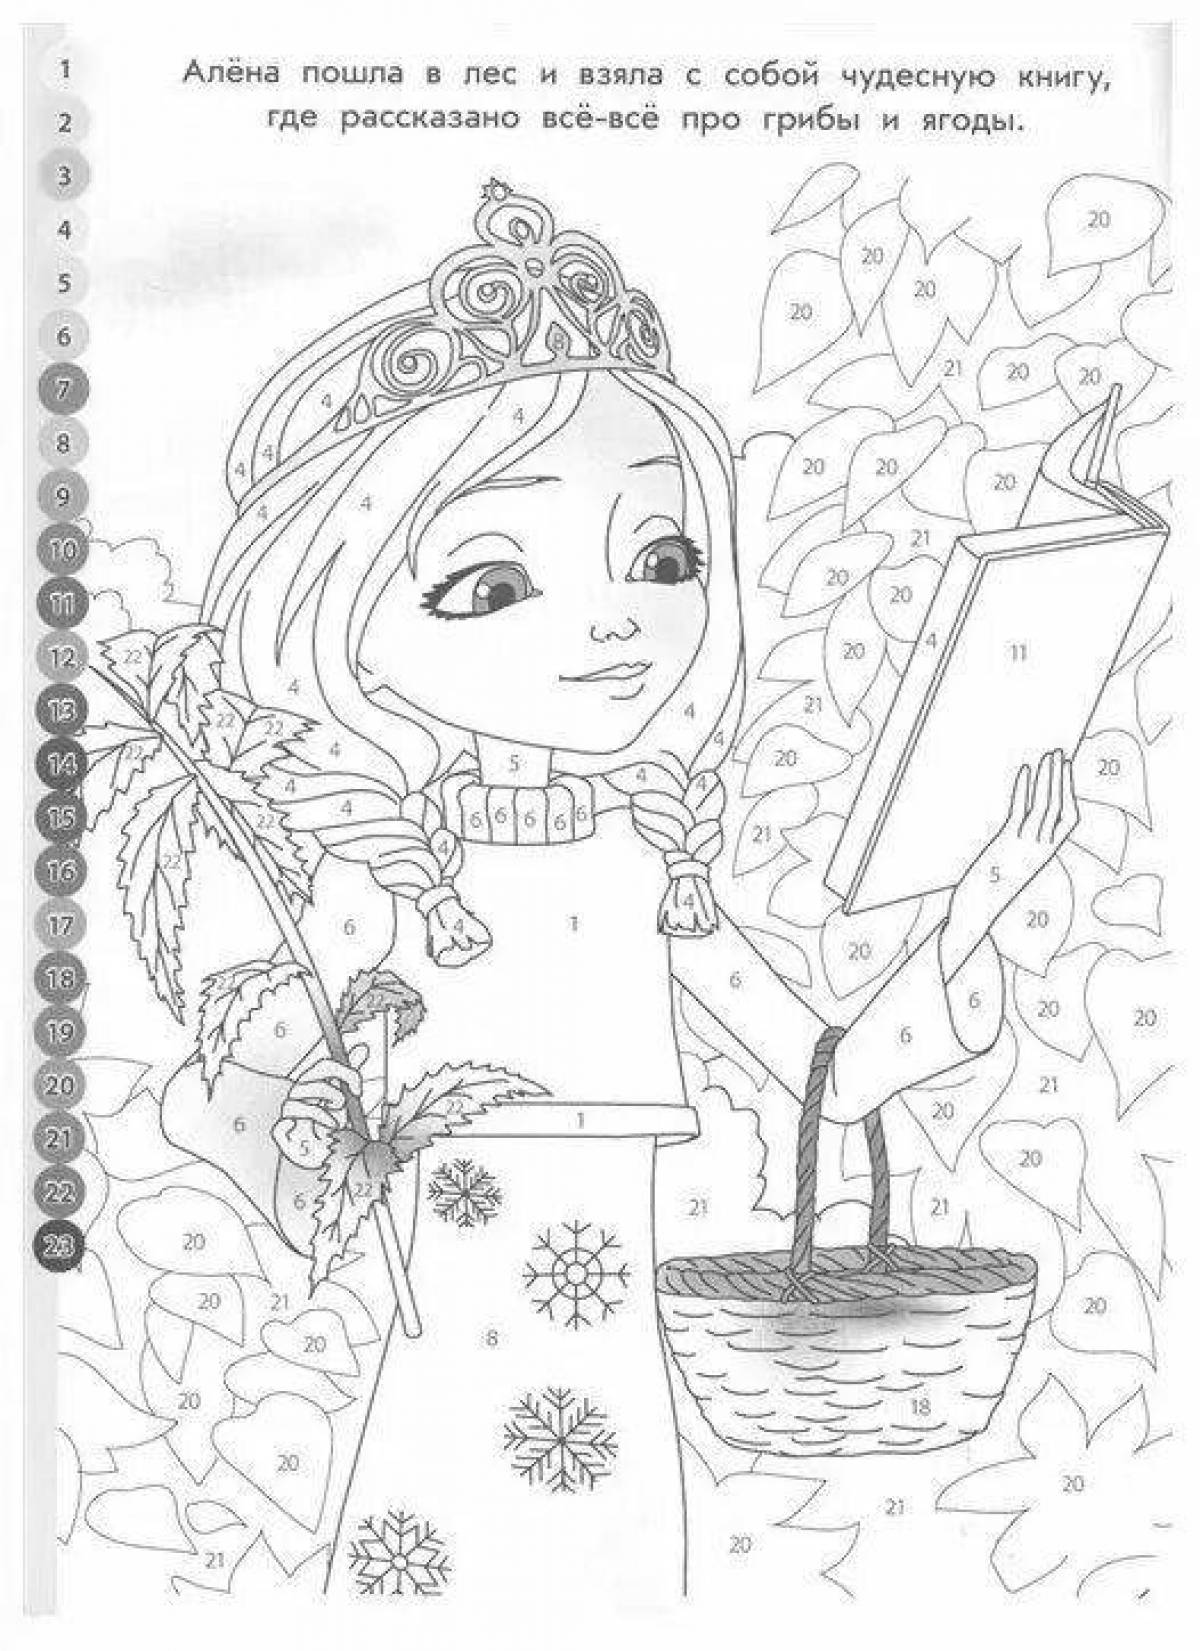 Bright alenka princess coloring